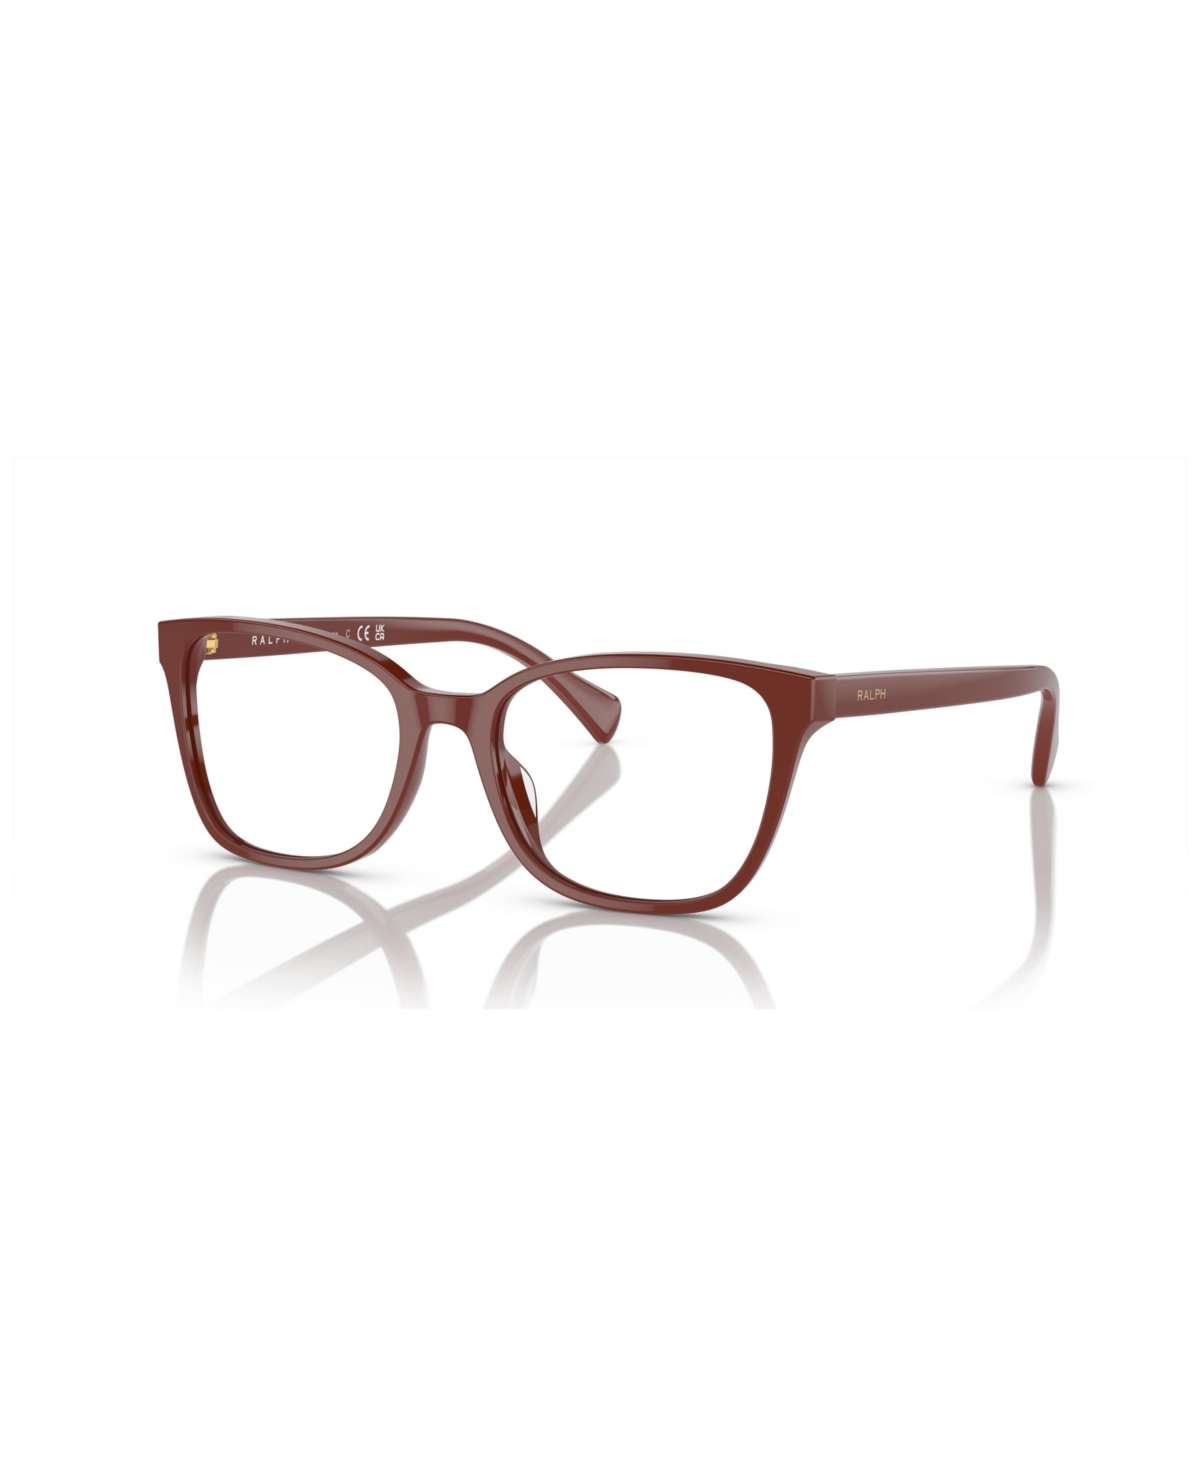 Women's Eyeglasses, RA7137U - Shiny Brown Red